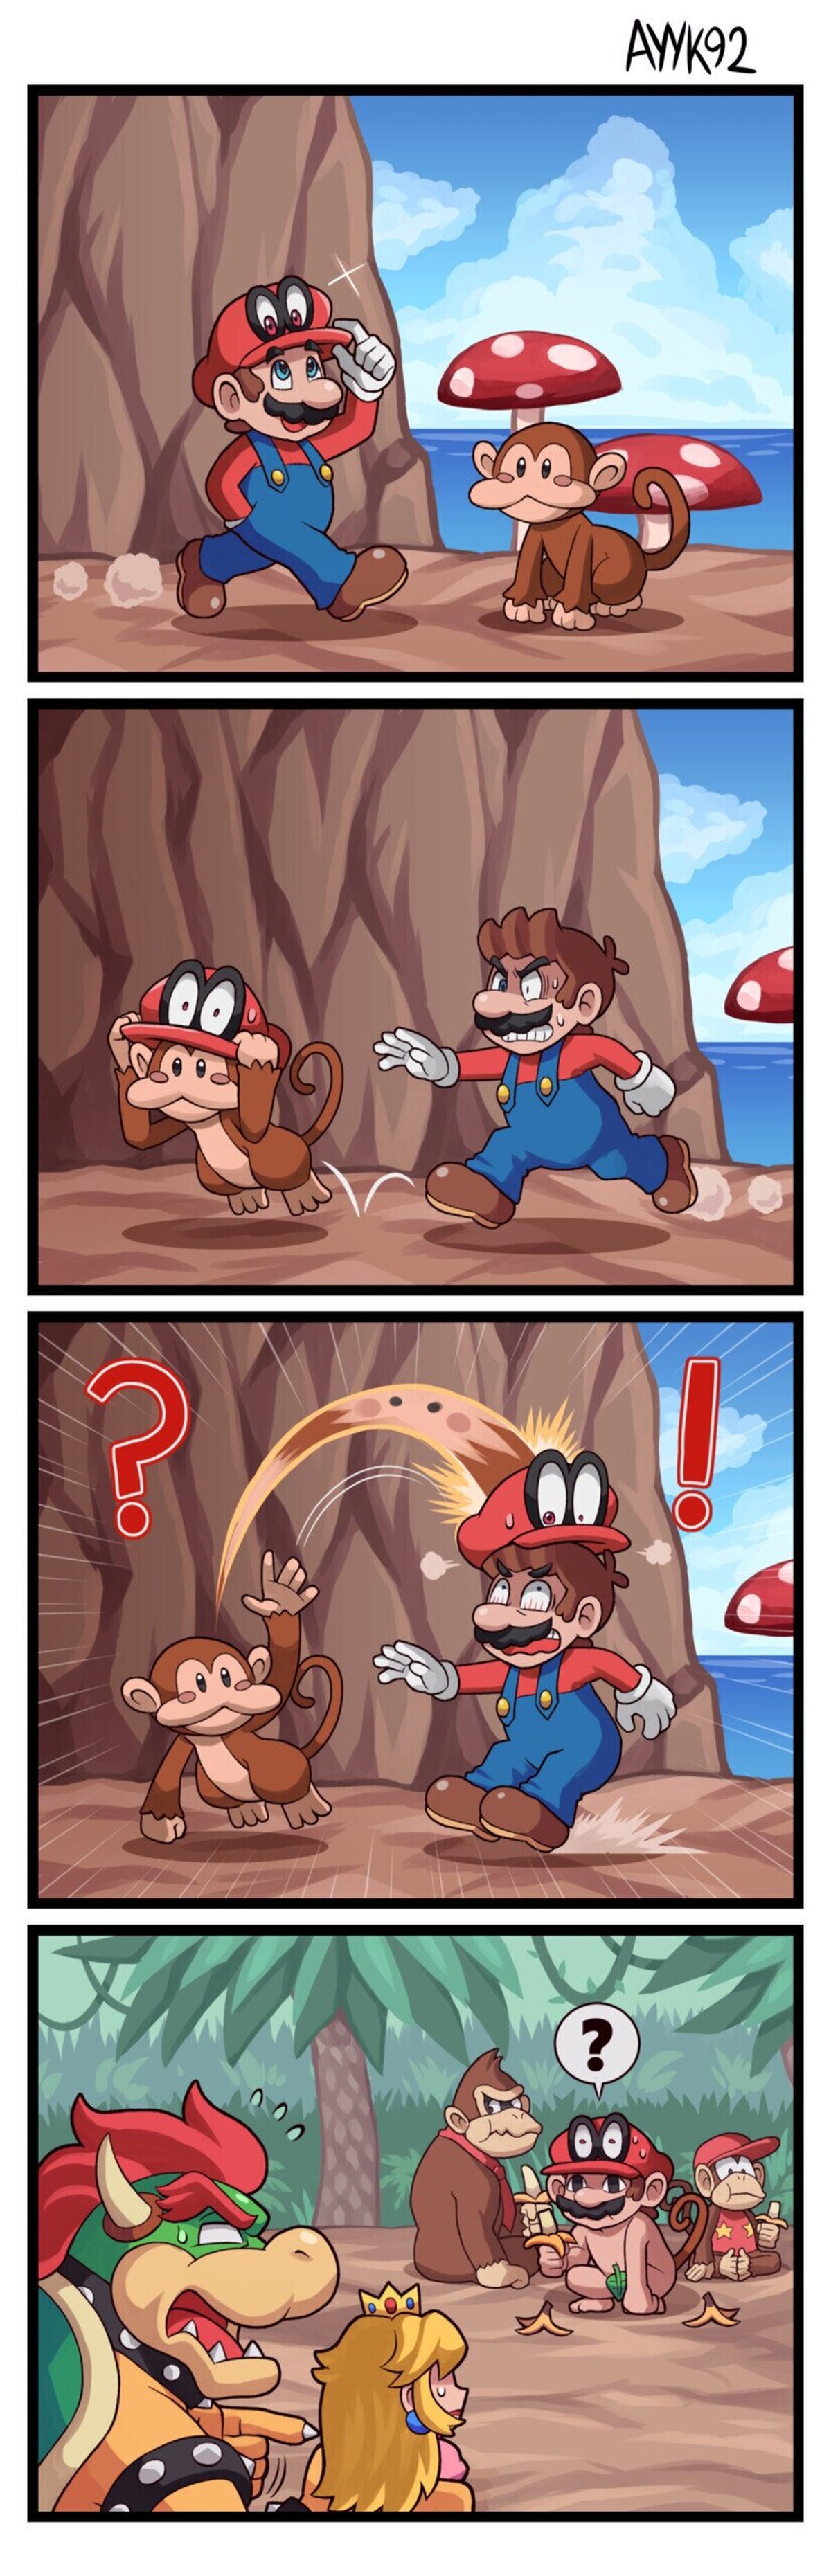 Lo peor que le podía pasar a Mario. Por Ayyk92